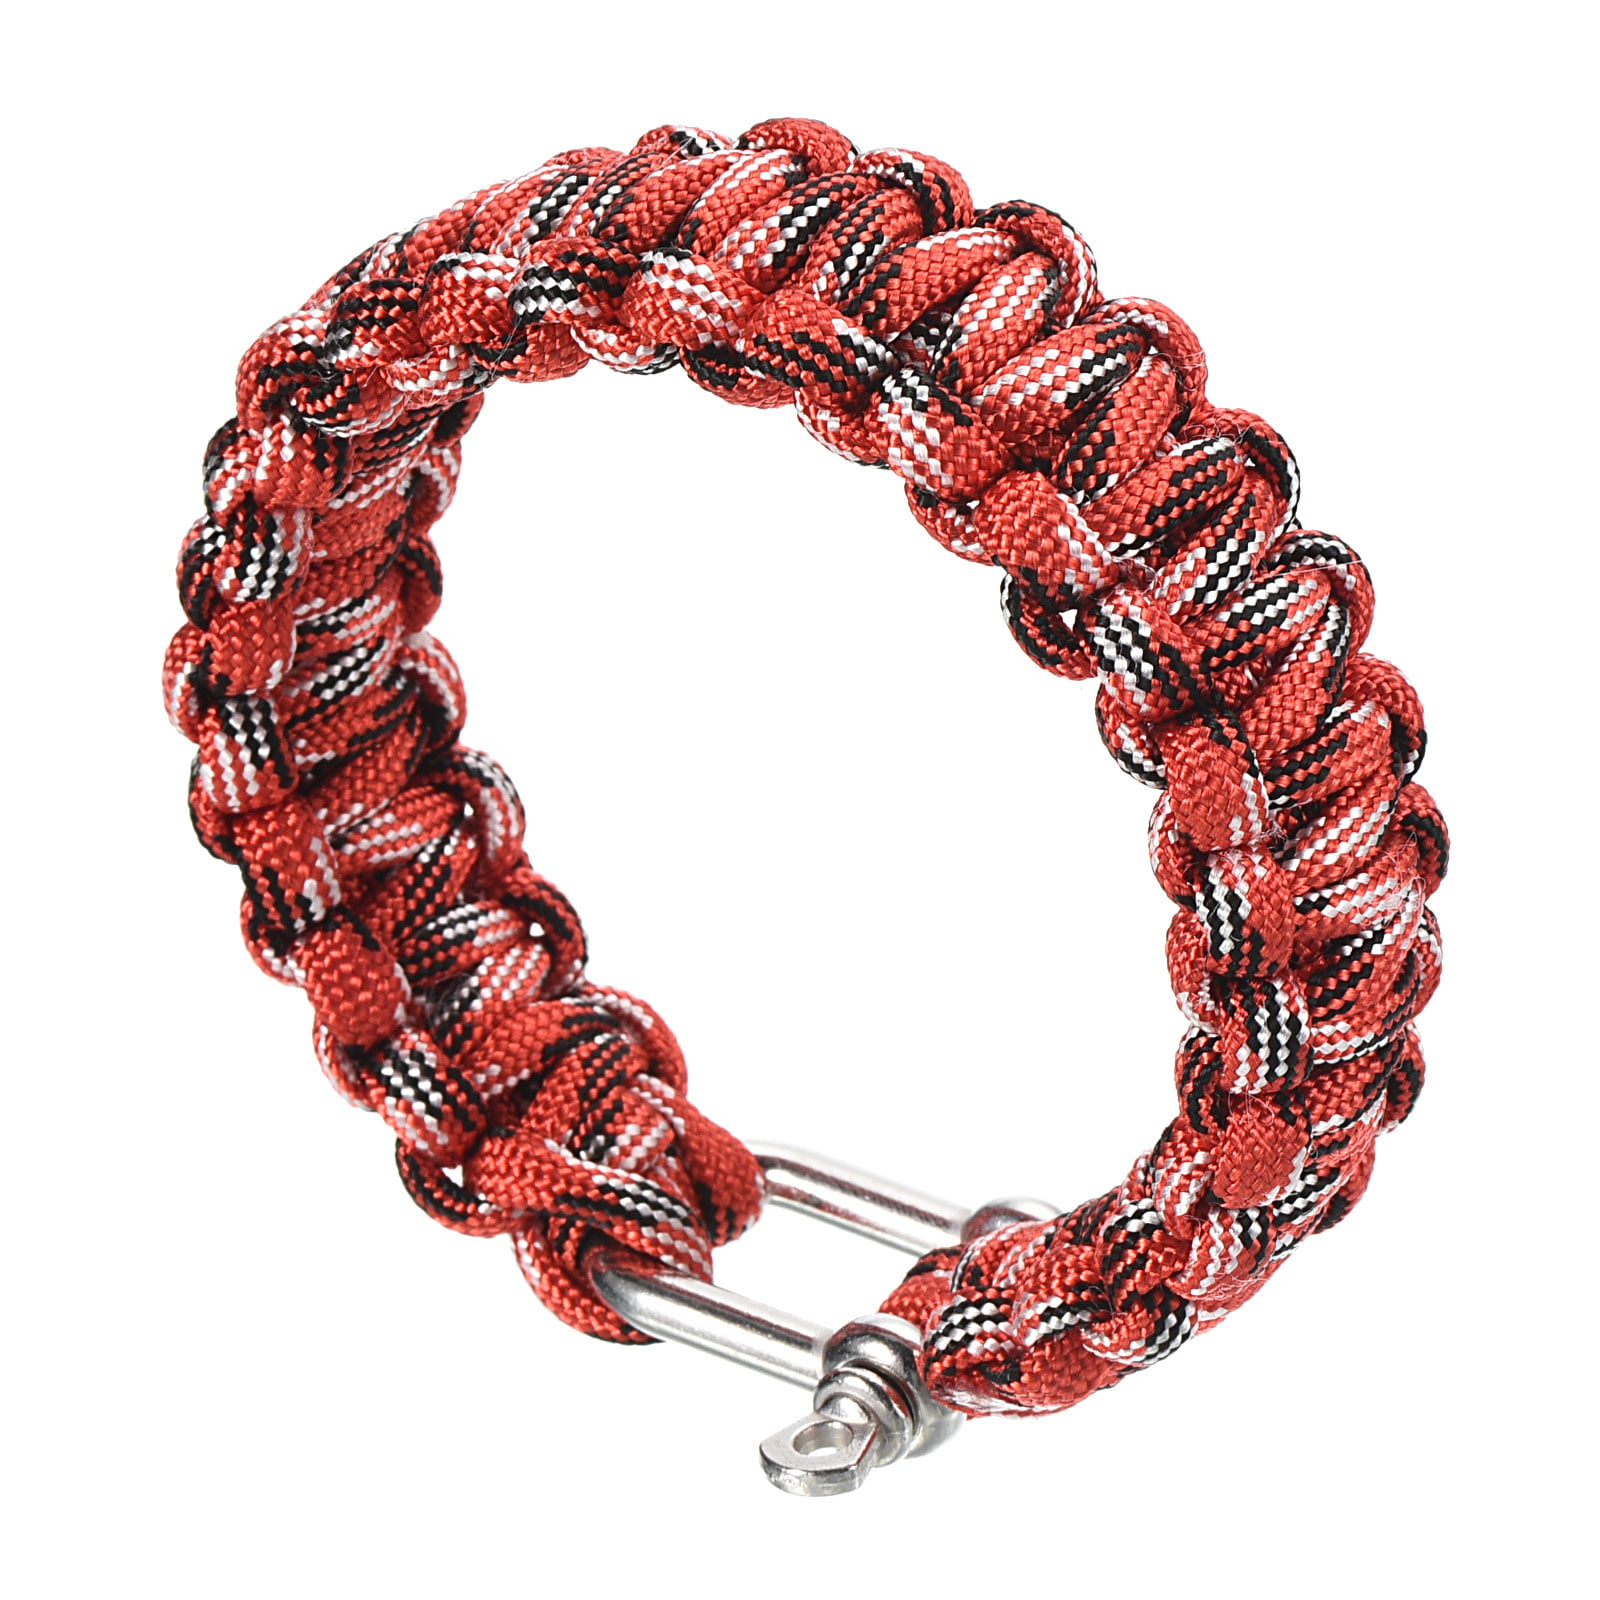 Paracord survival bracelet snake knot – Artos Adventure